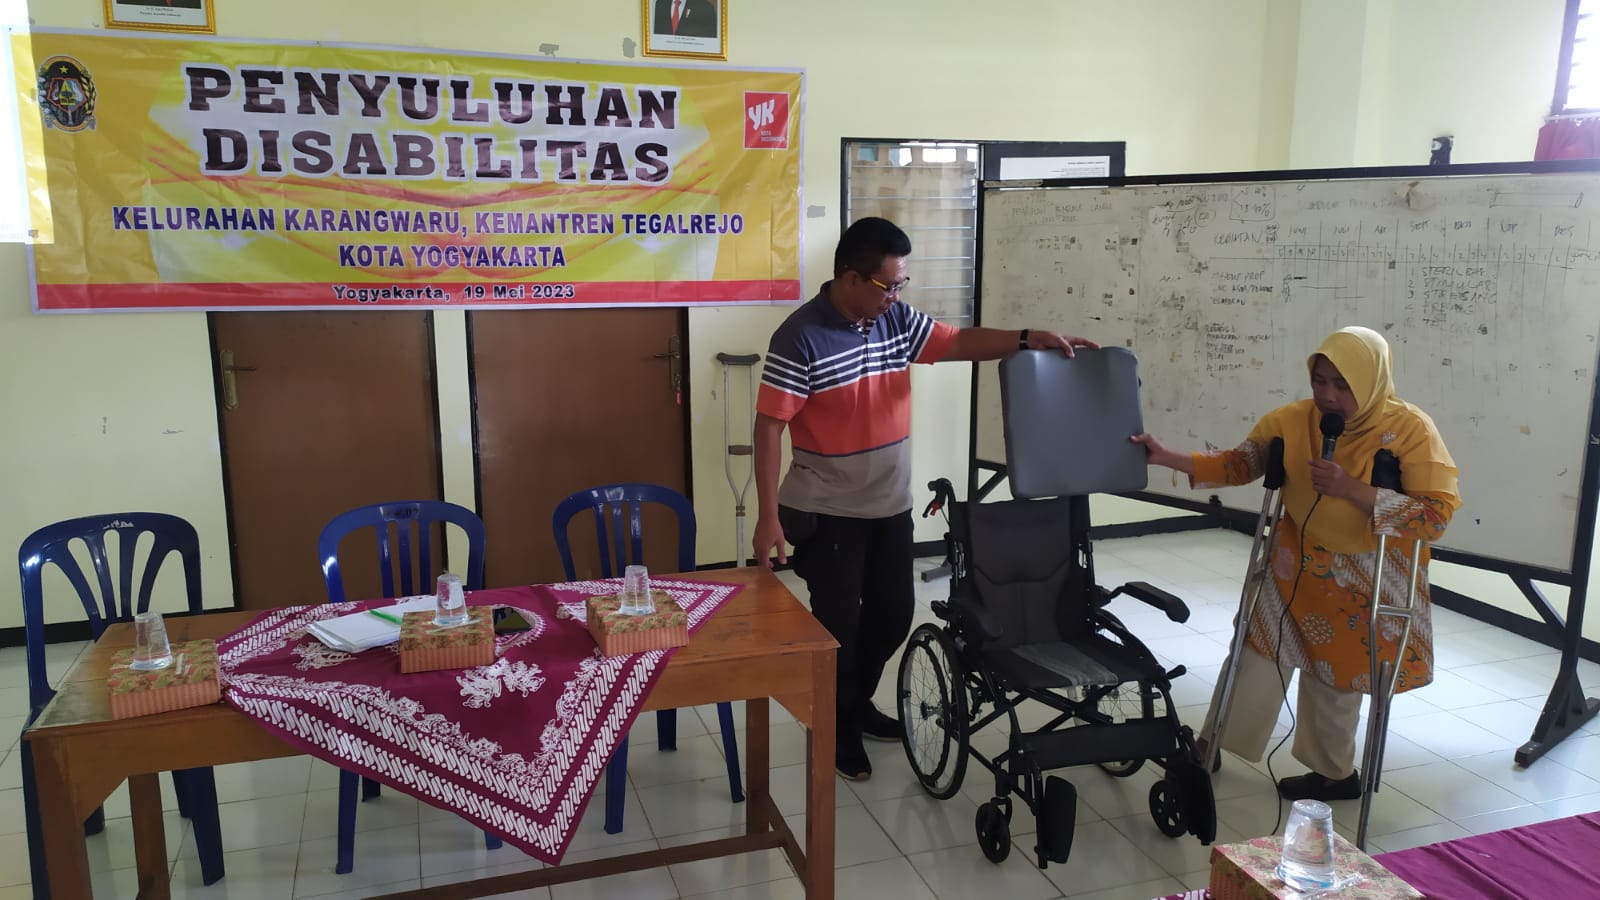 Penyuluhan Disabilitas kelurahan karangwaru